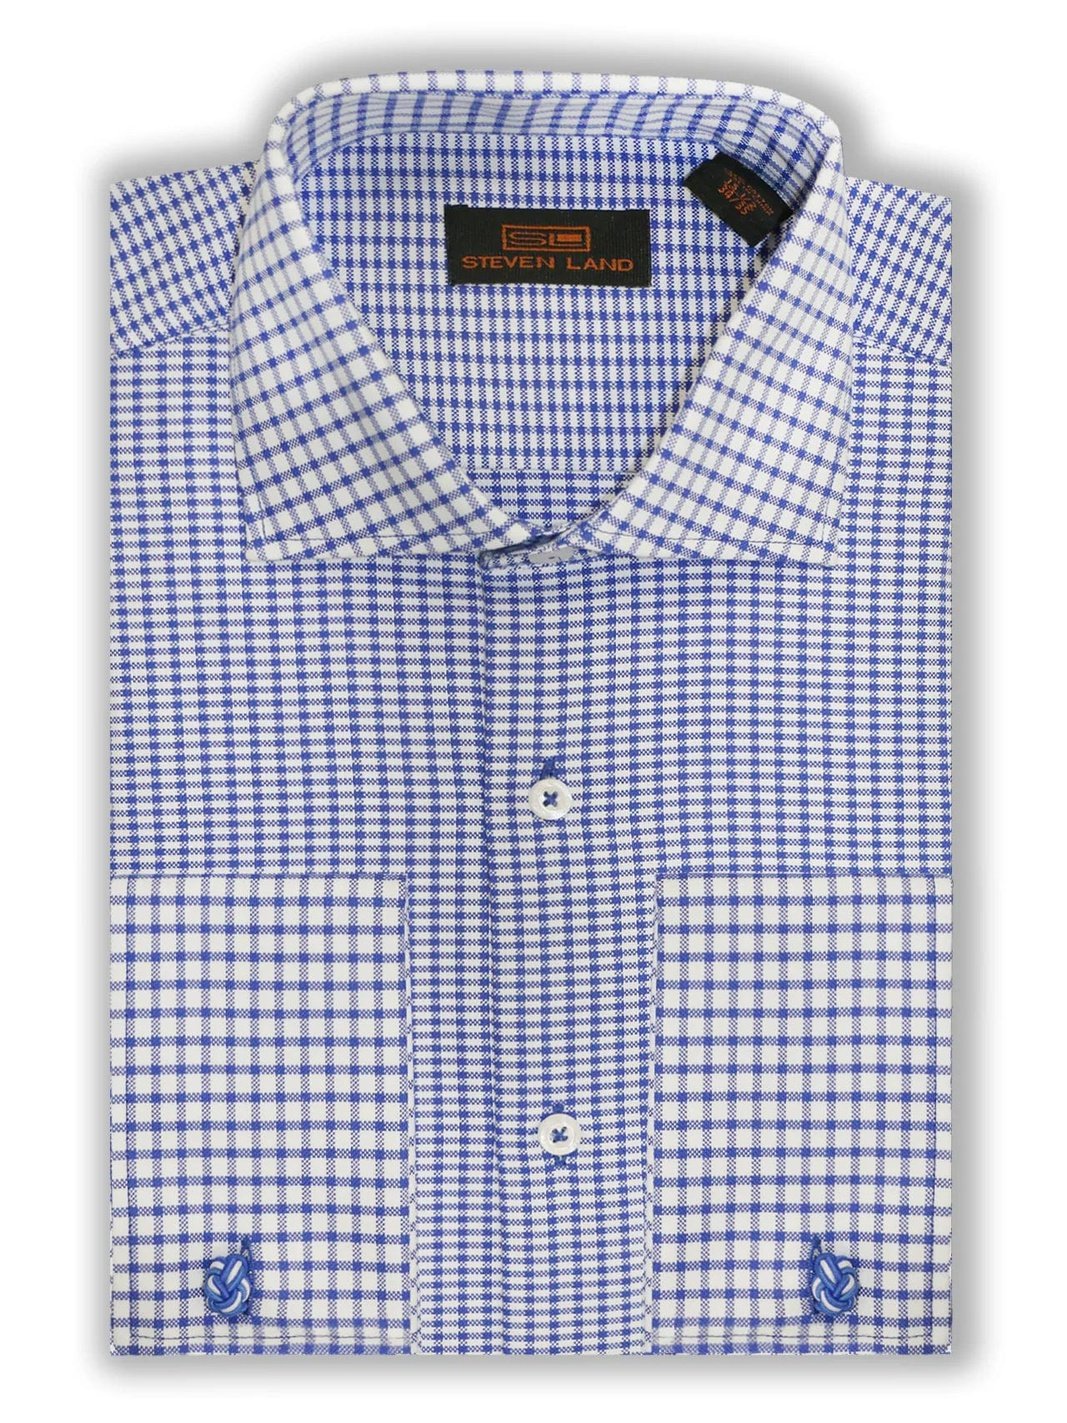 Steven Land SHIRTS Steven Land Mens Blue Check Spread Collar French Cuff 100% Cotton Dress Shirt